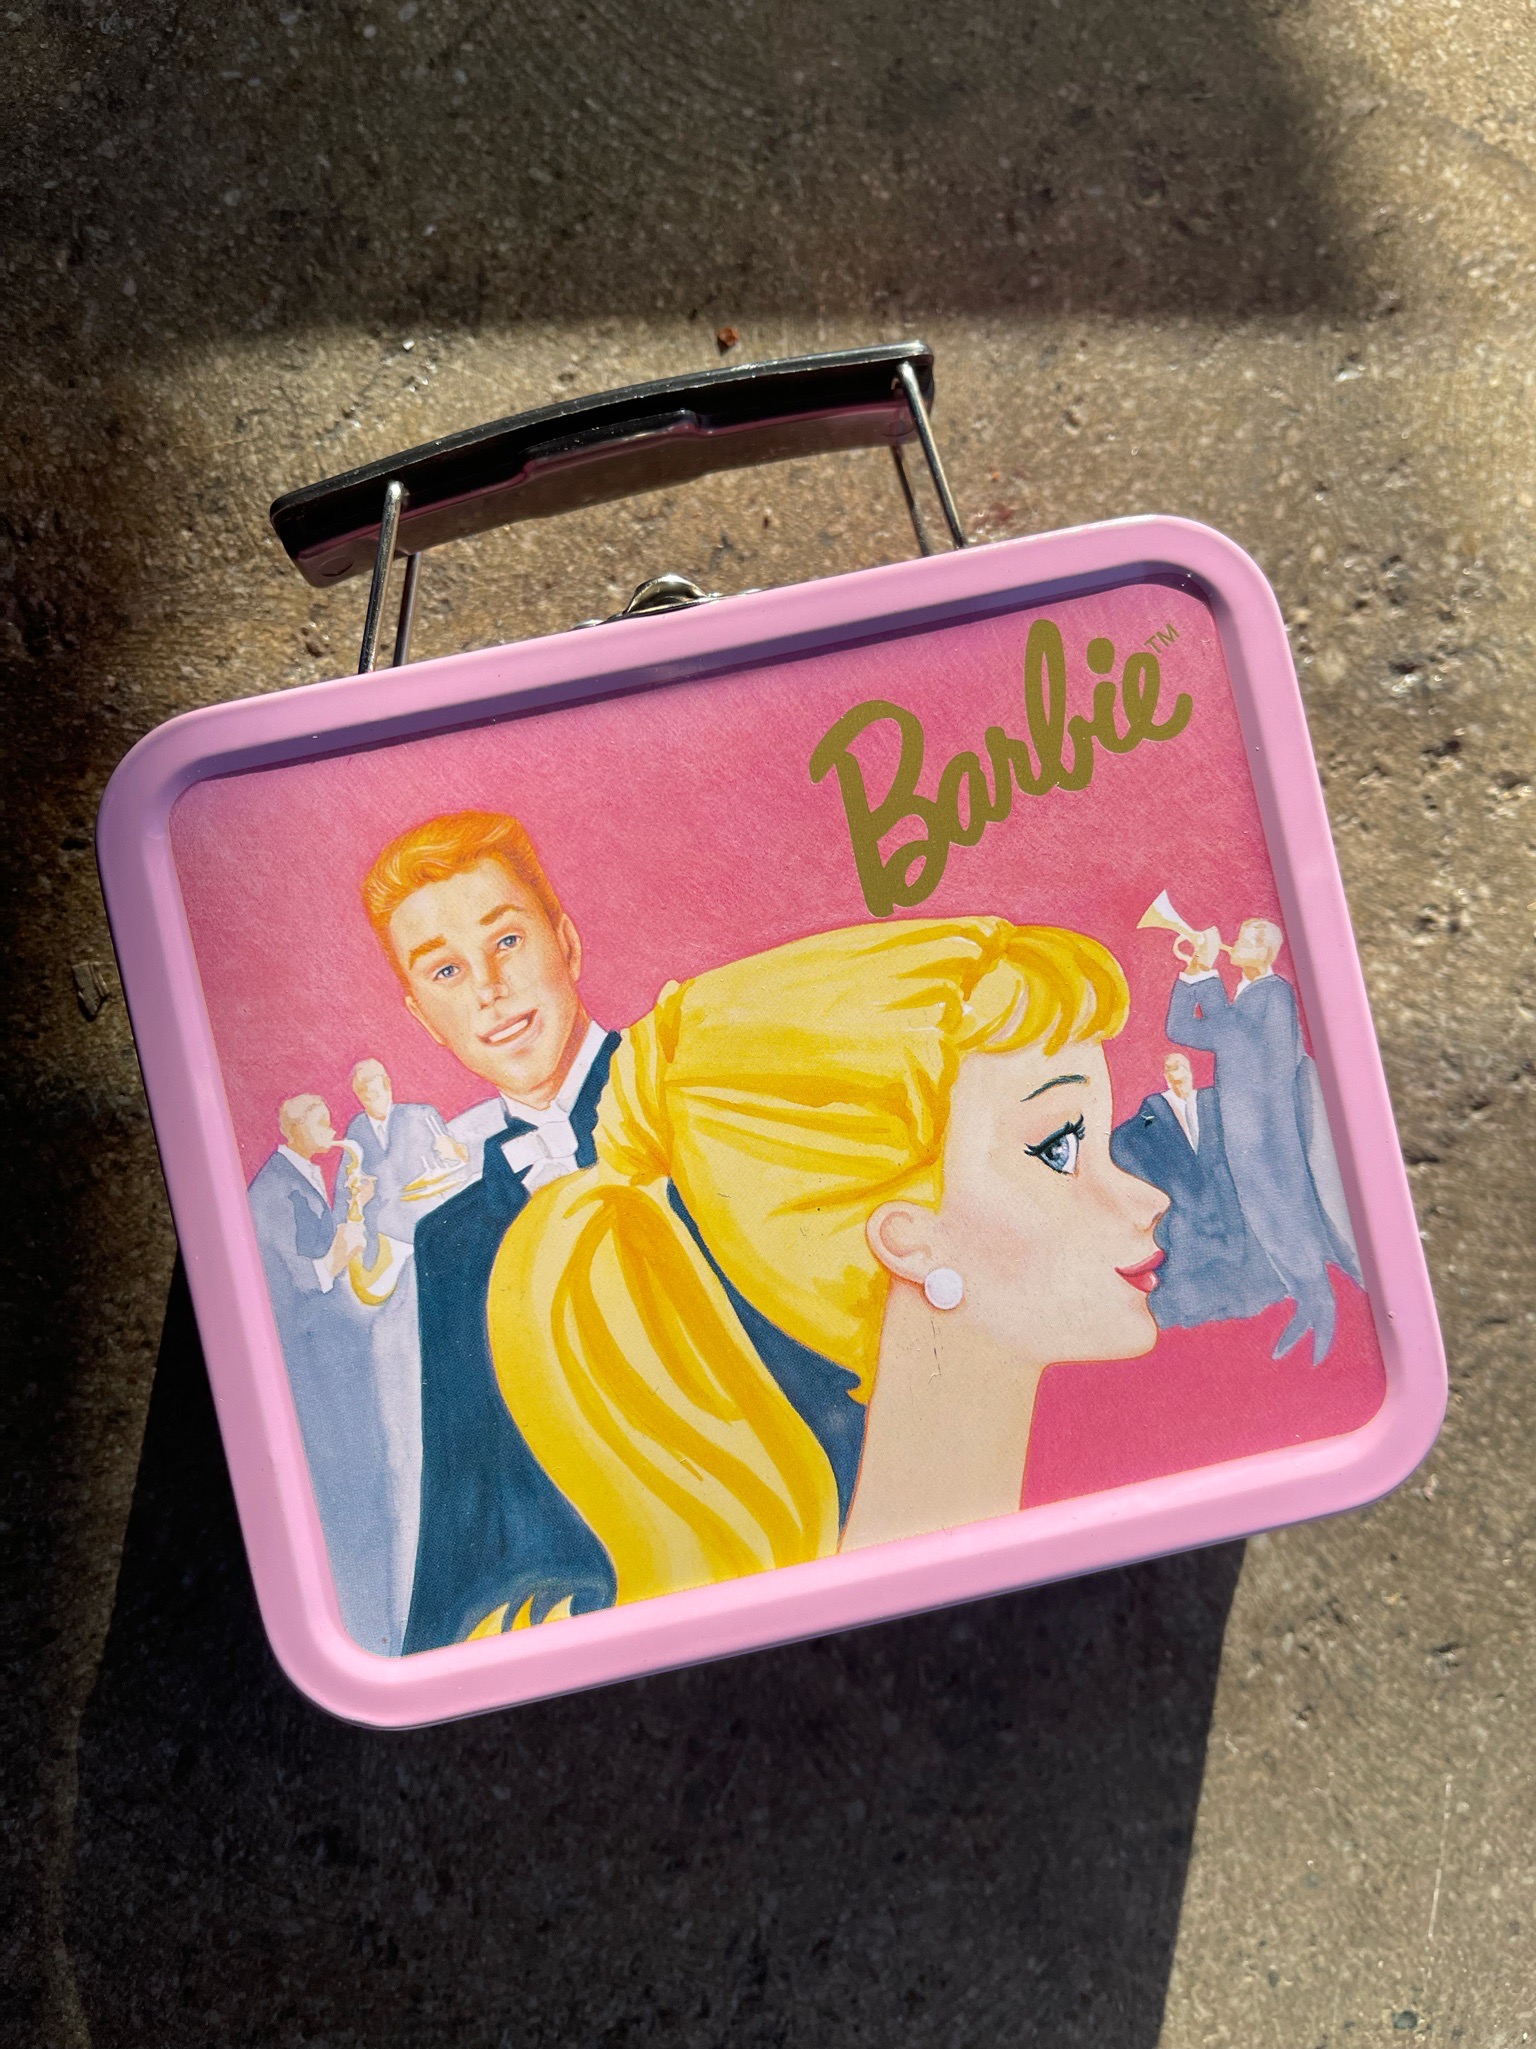 Rare Vintage Barbie Doll Lunch Box - Unused